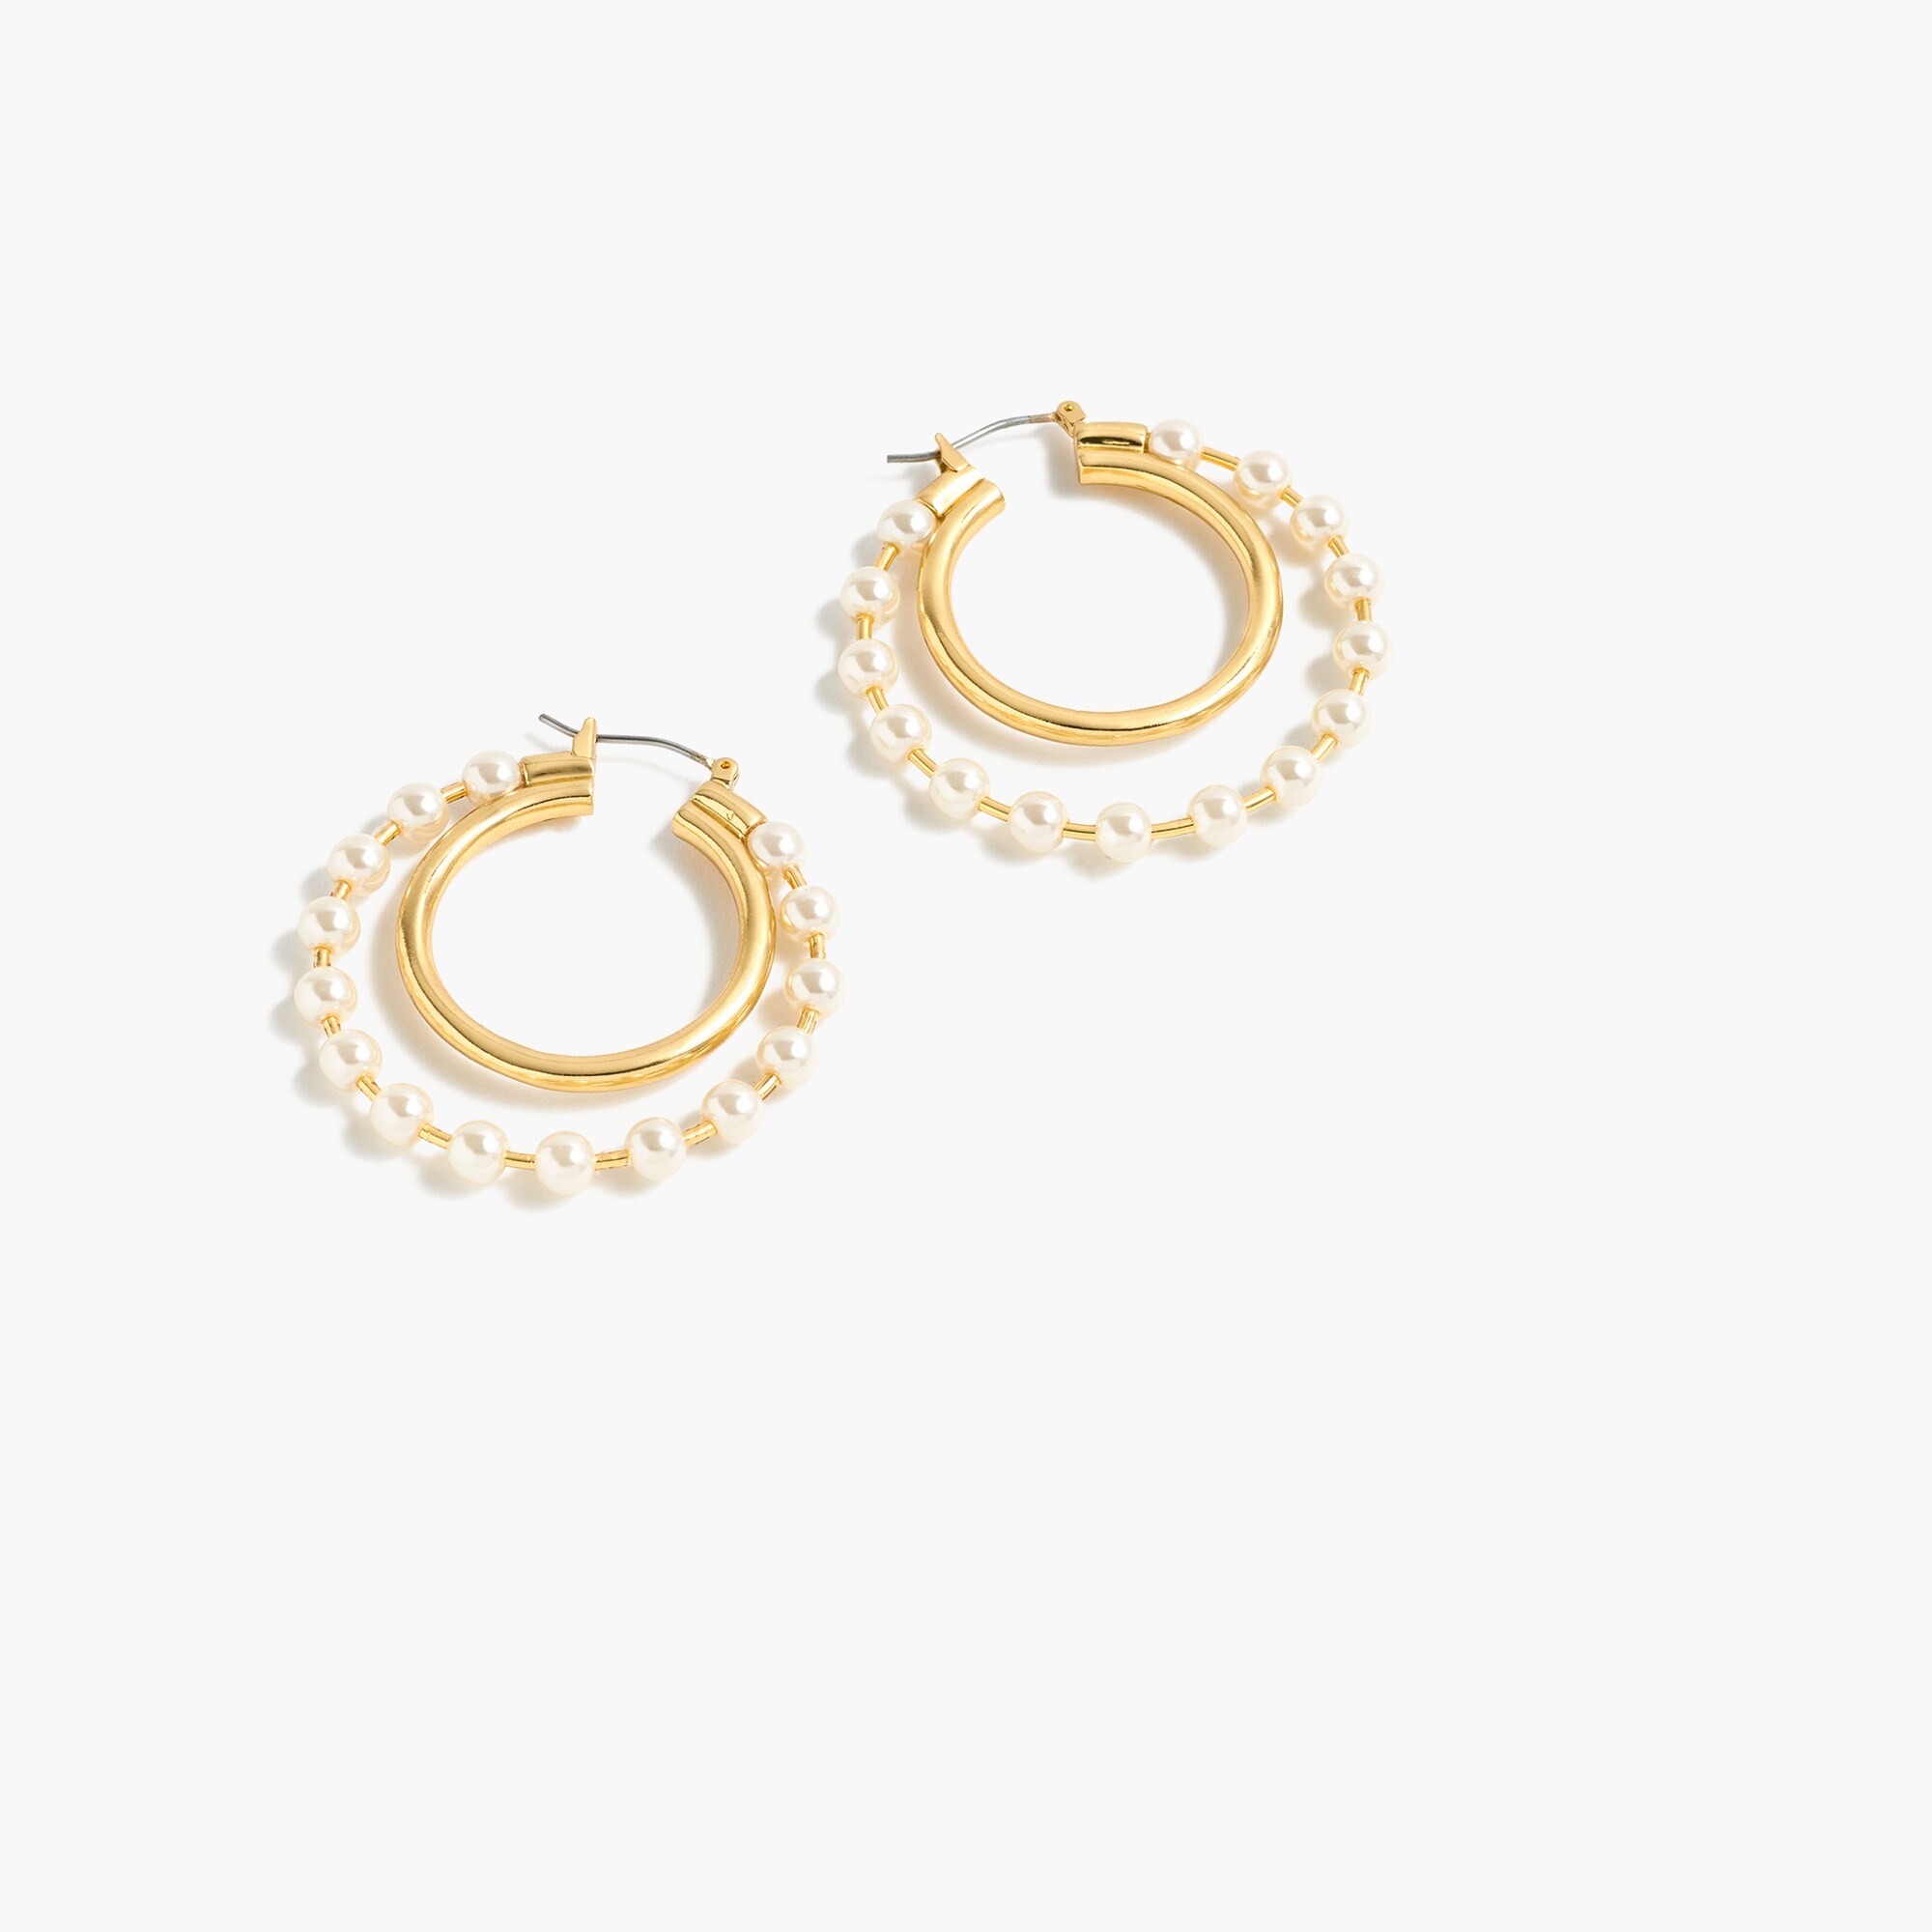 Women's Jewelry : Earrings, Necklaces & More | J.Crew